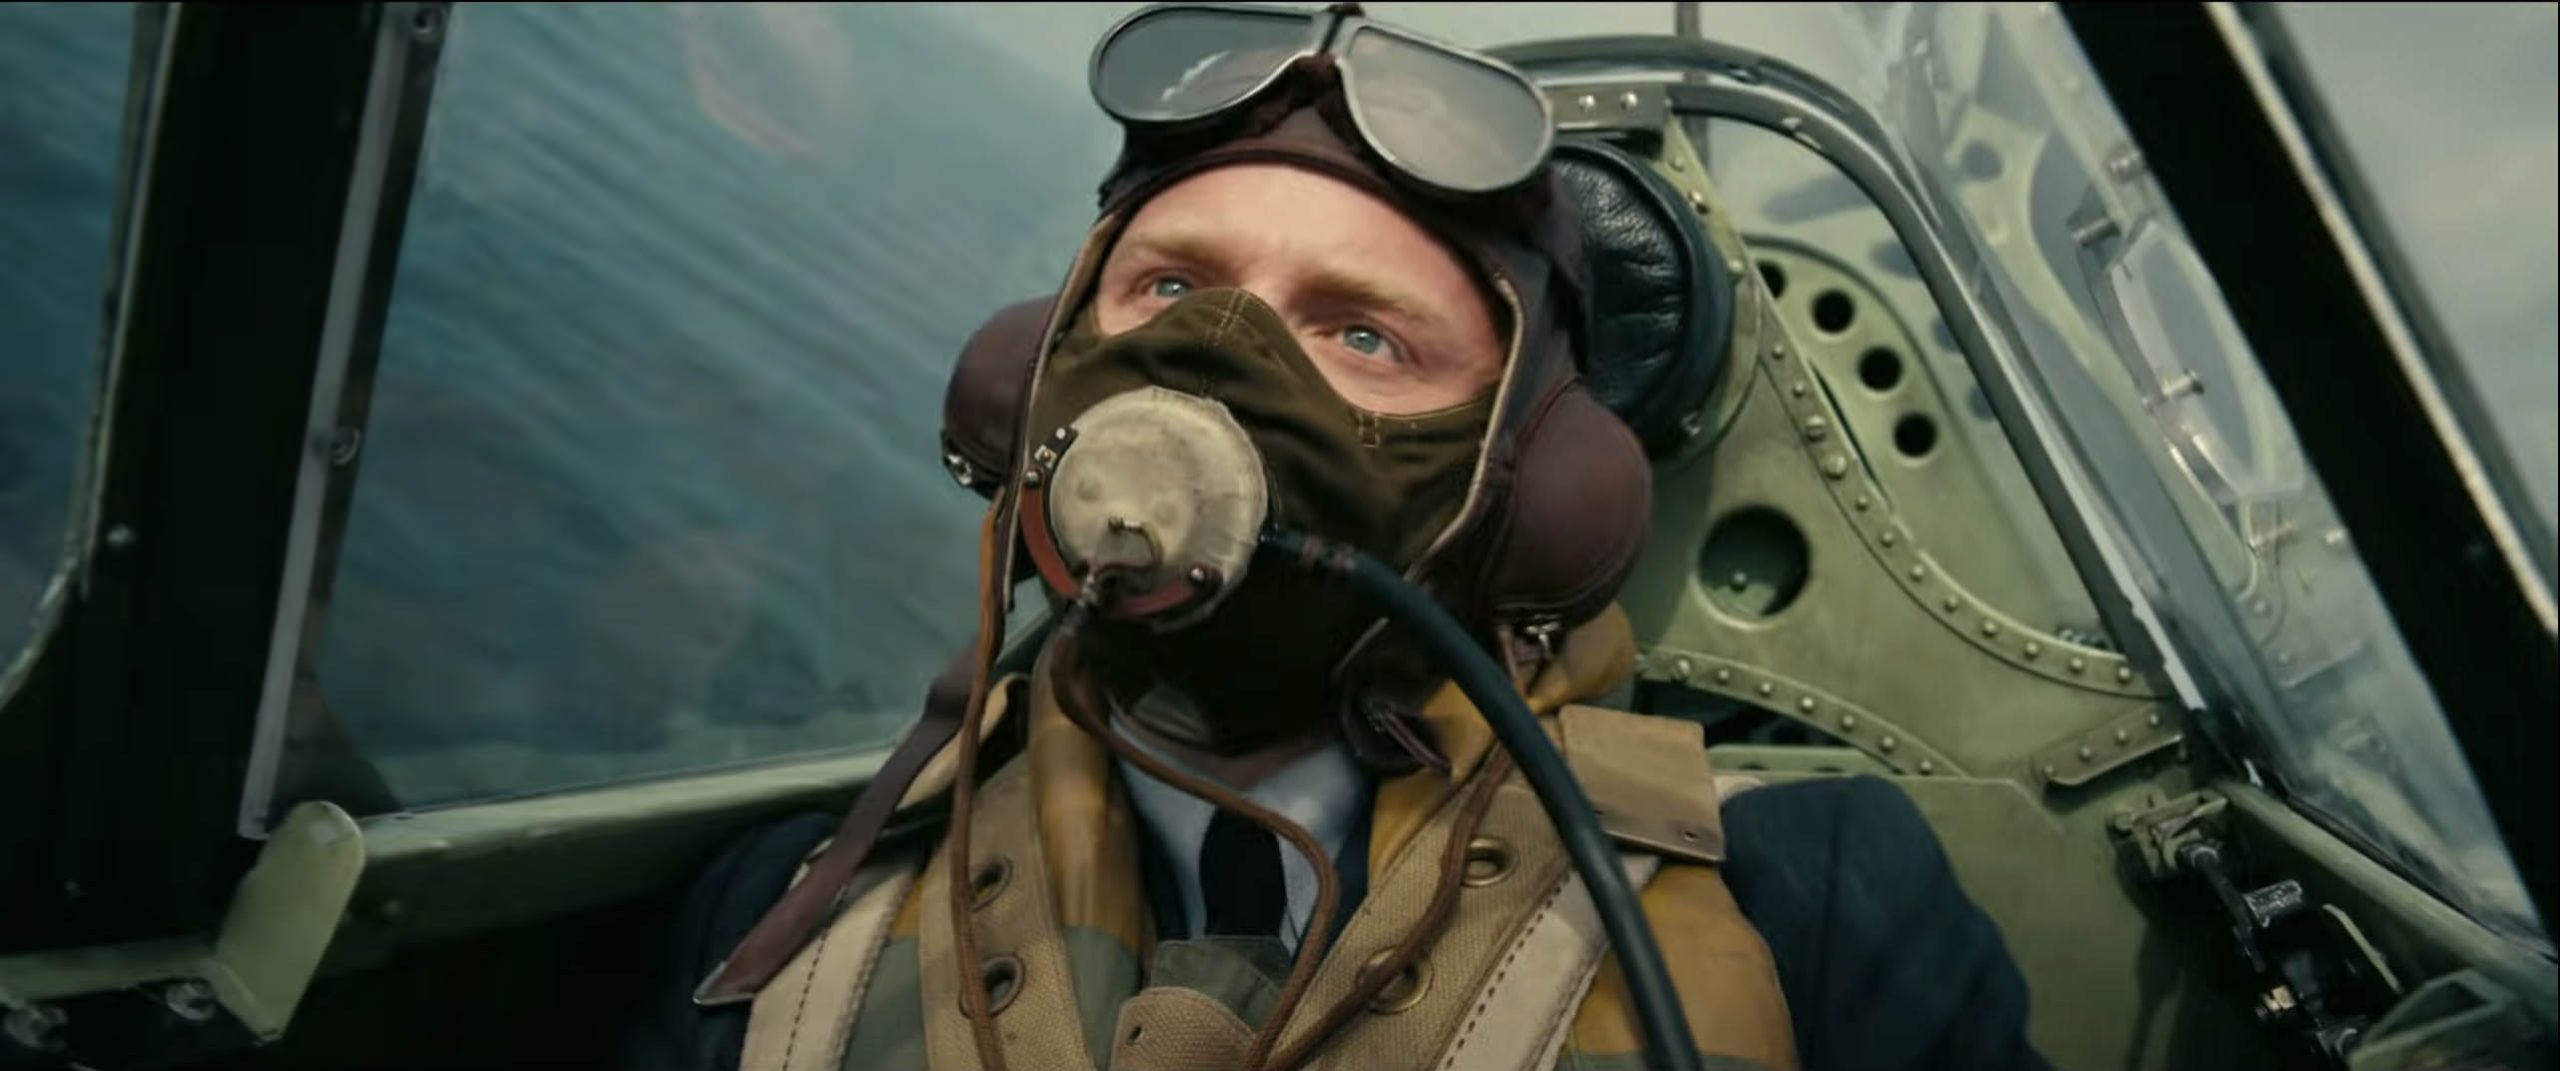 Dunkirk (2017) starring Tom Hardy